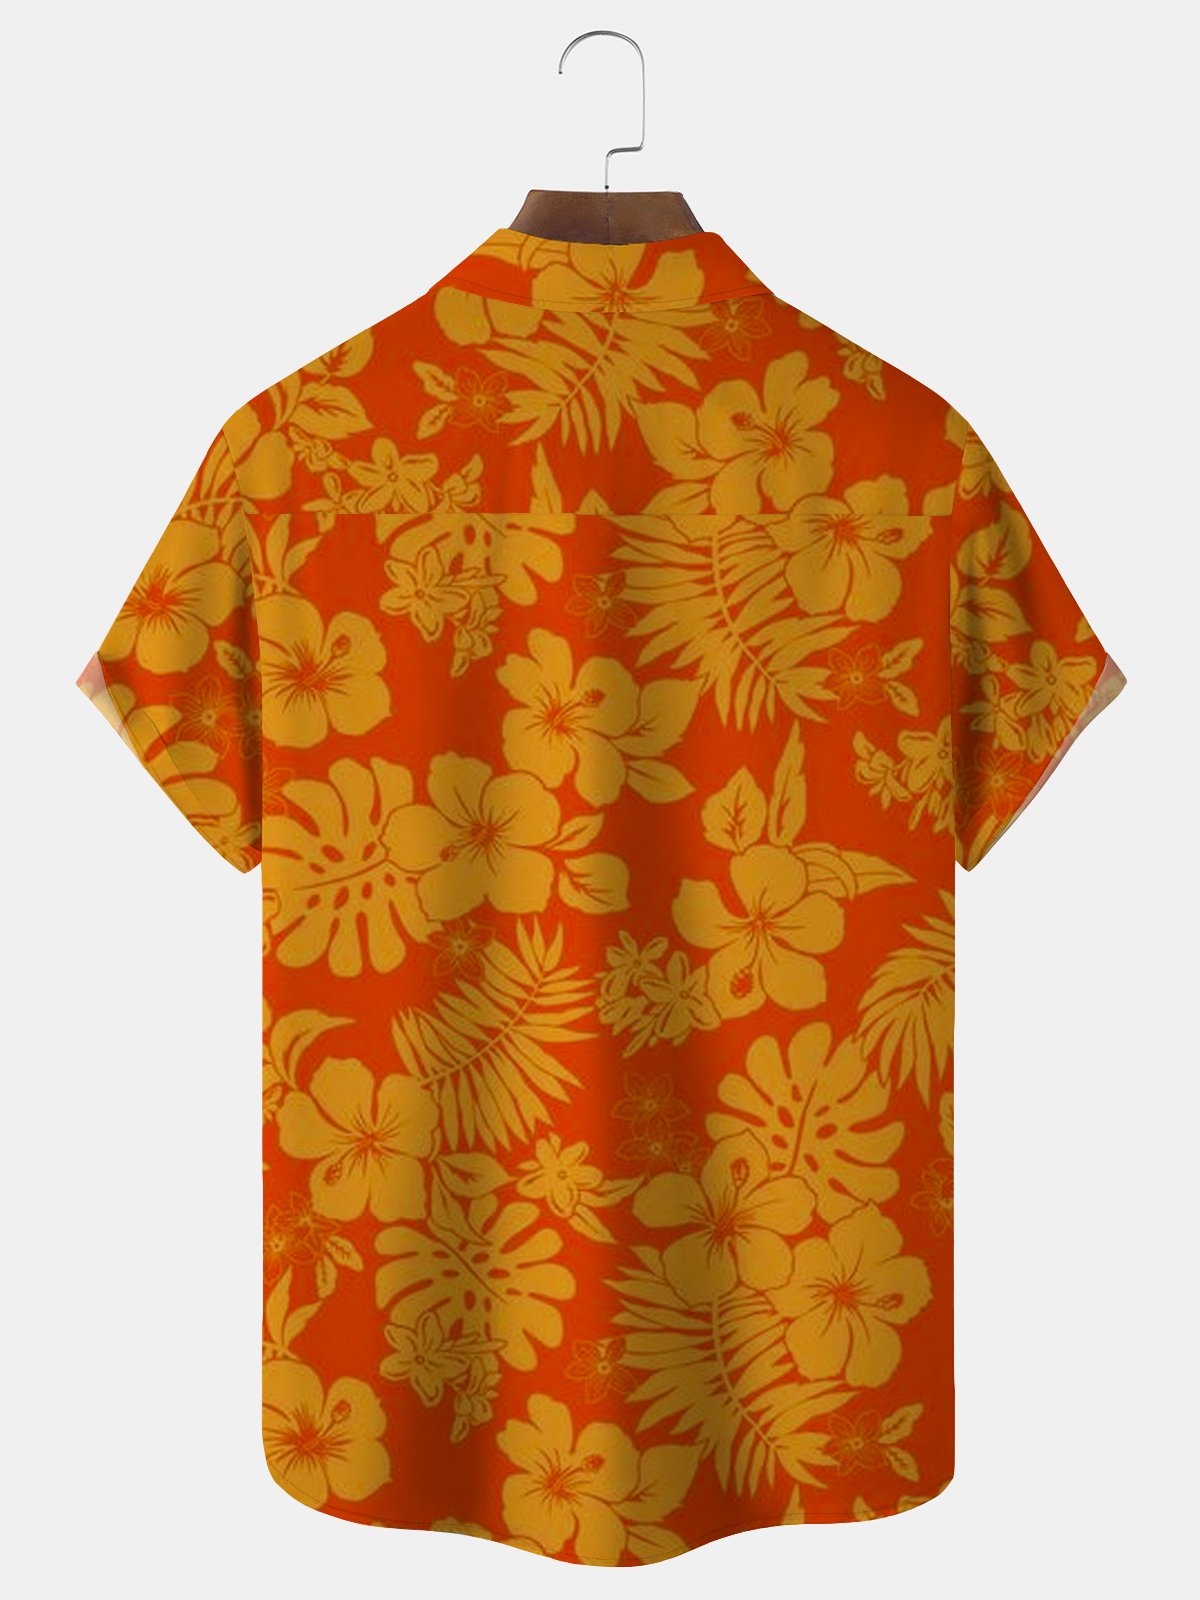 Royaura Orange Tropical Floral Print Vacation Beach Hawaiian Oversized Aloha Wrinkle-Free Shirt